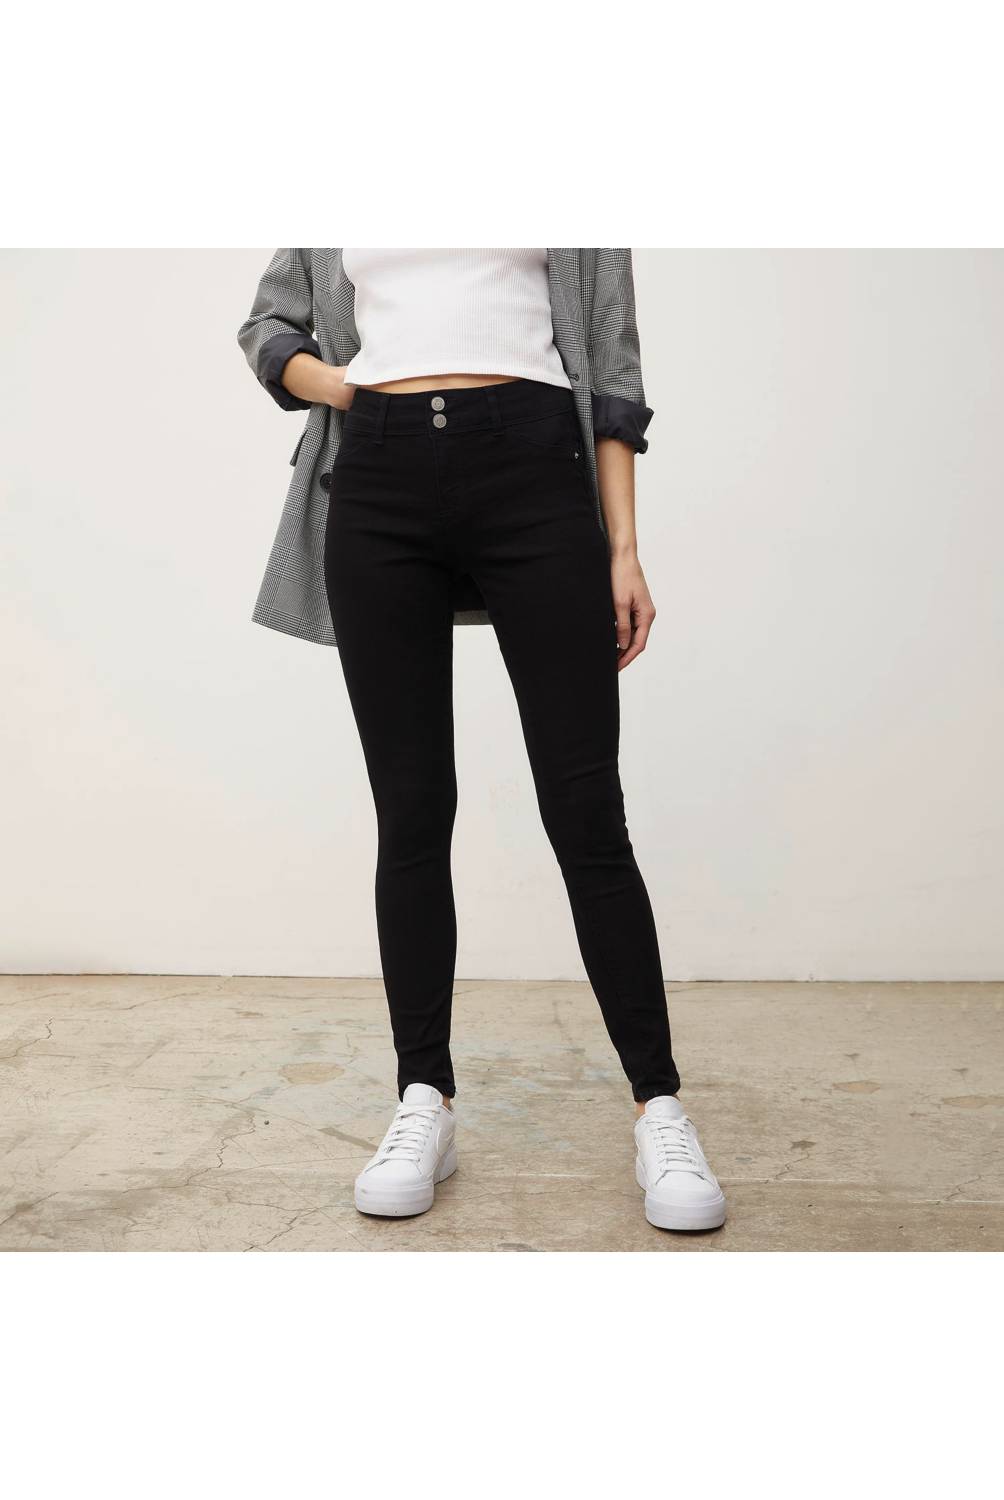  MilaBrown Jeans para mujer, cintura alta, amplios